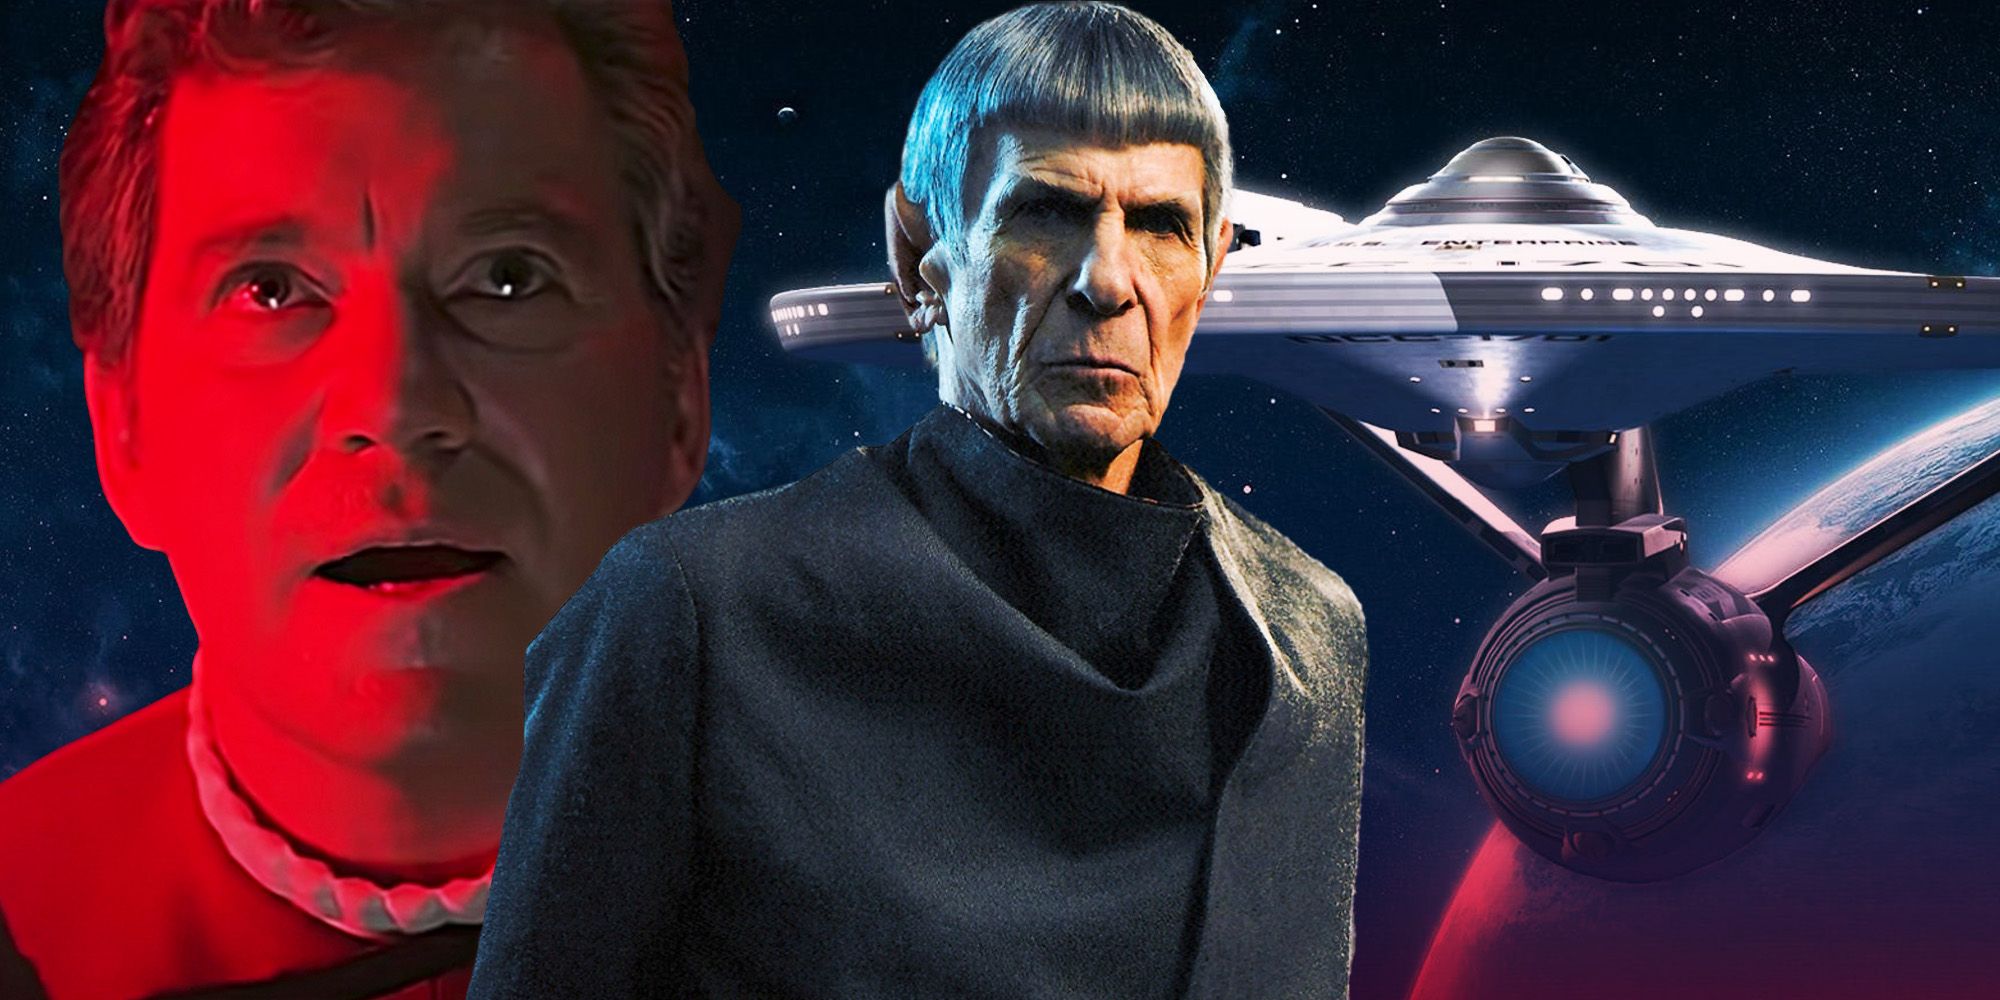 What Happened To Kirk & Enterprise Crew After Star Trek: TOS?